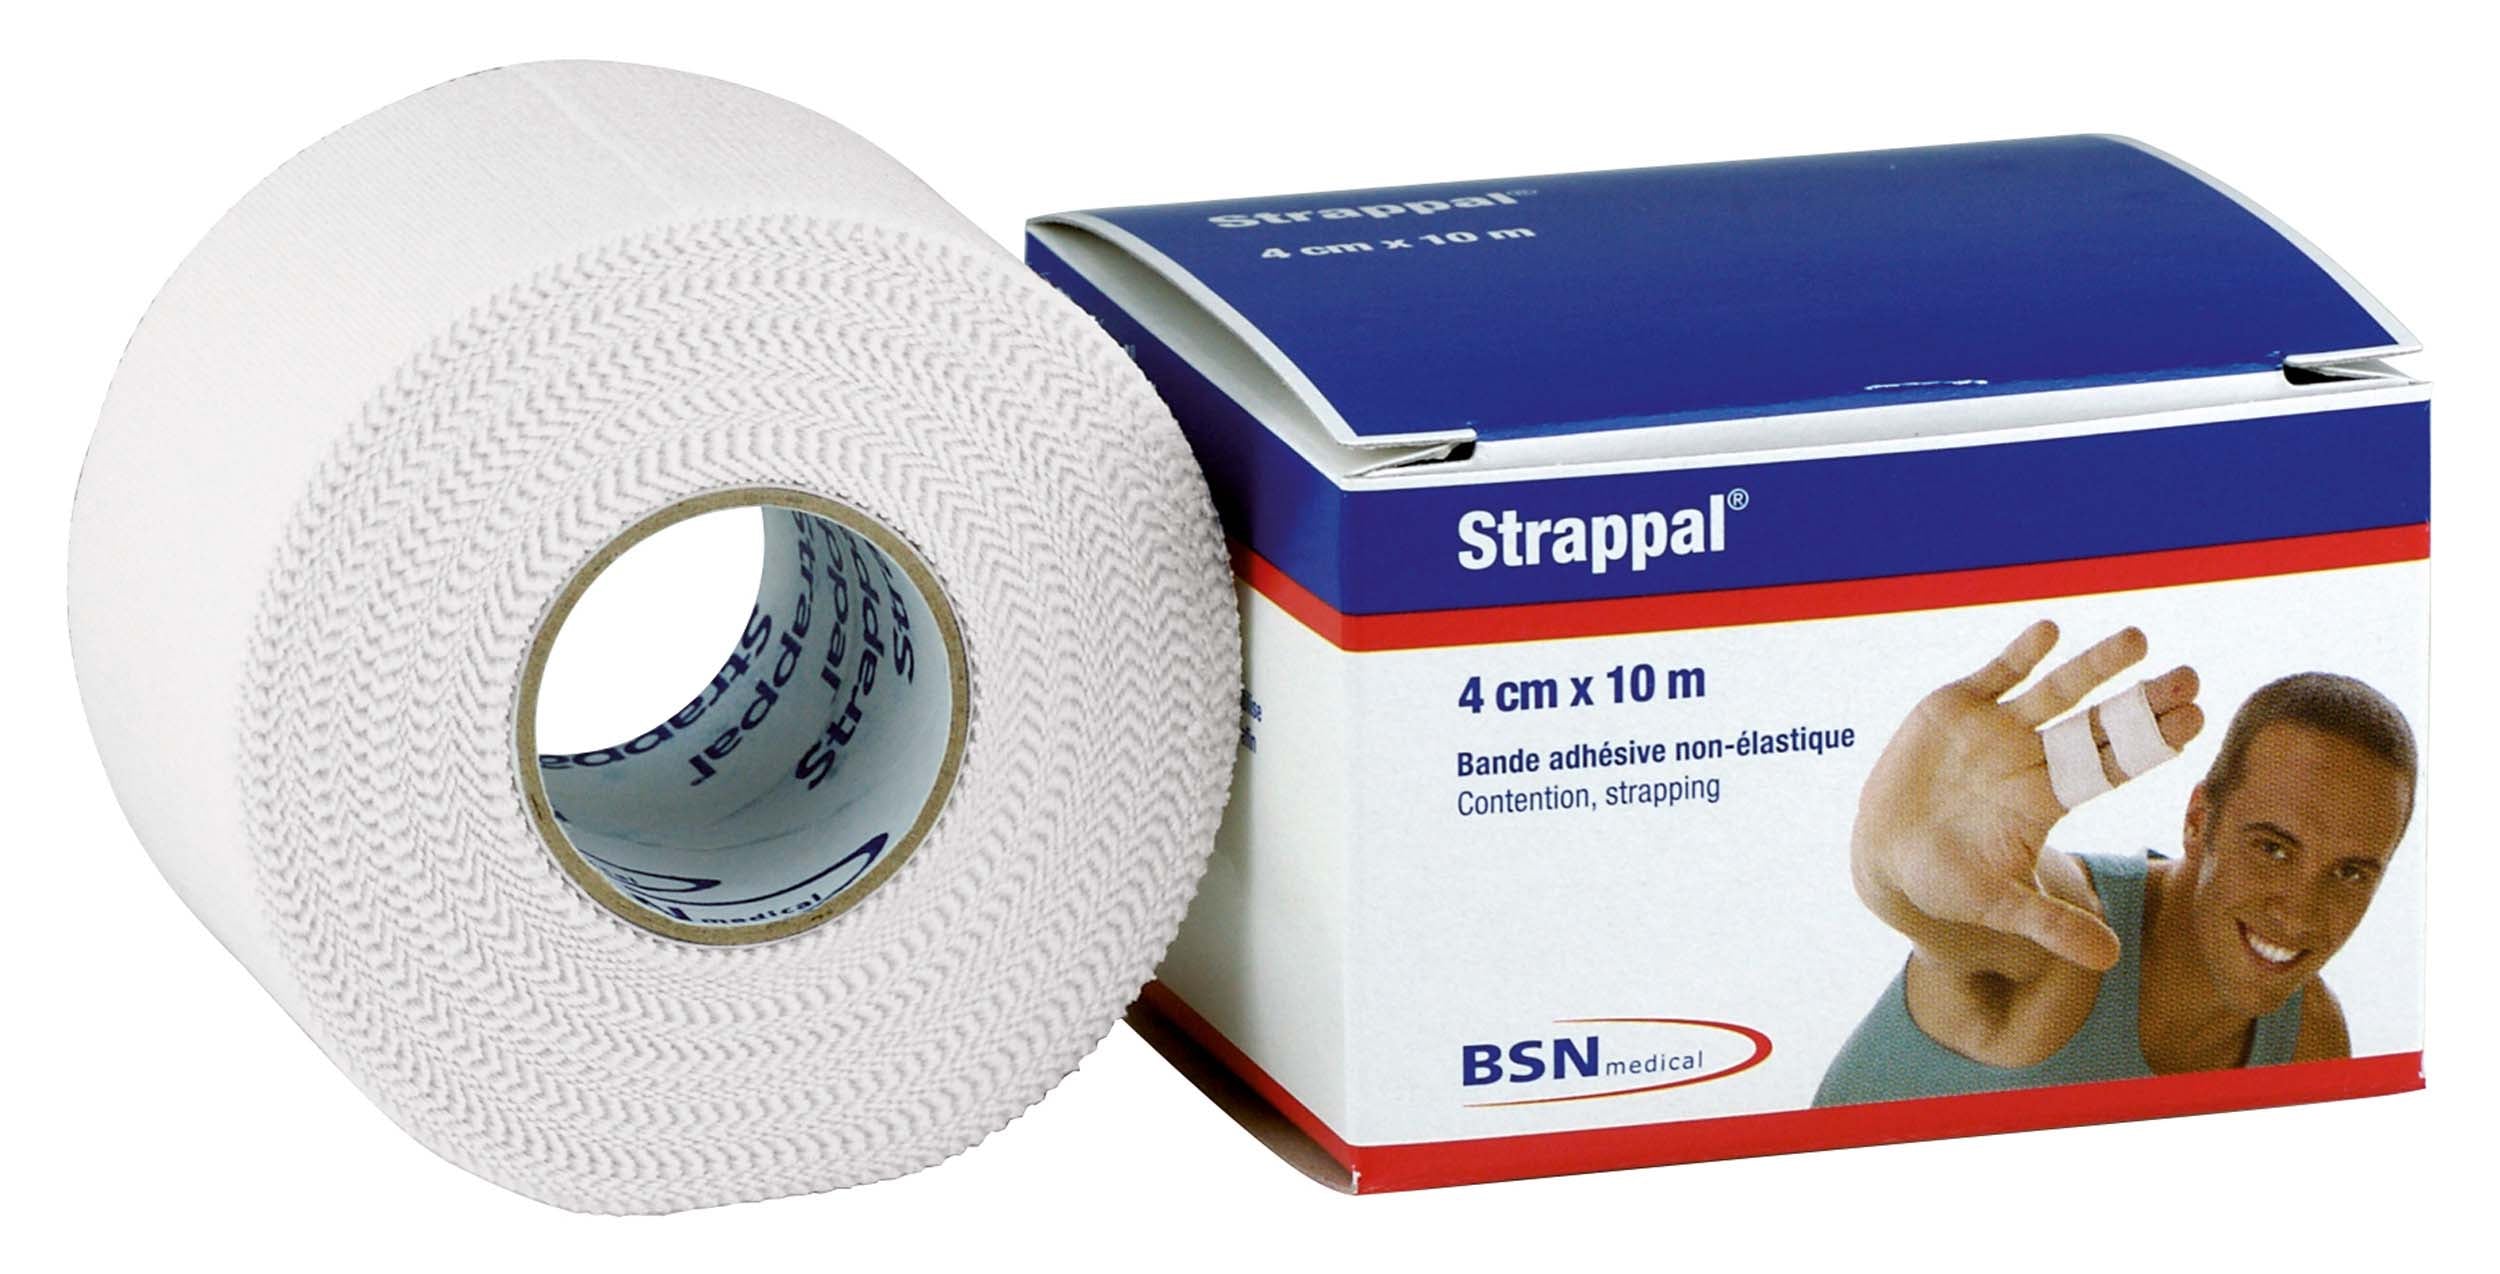 Strappal - Bande adhésive rigide - 4 dimensions - BSN Medical